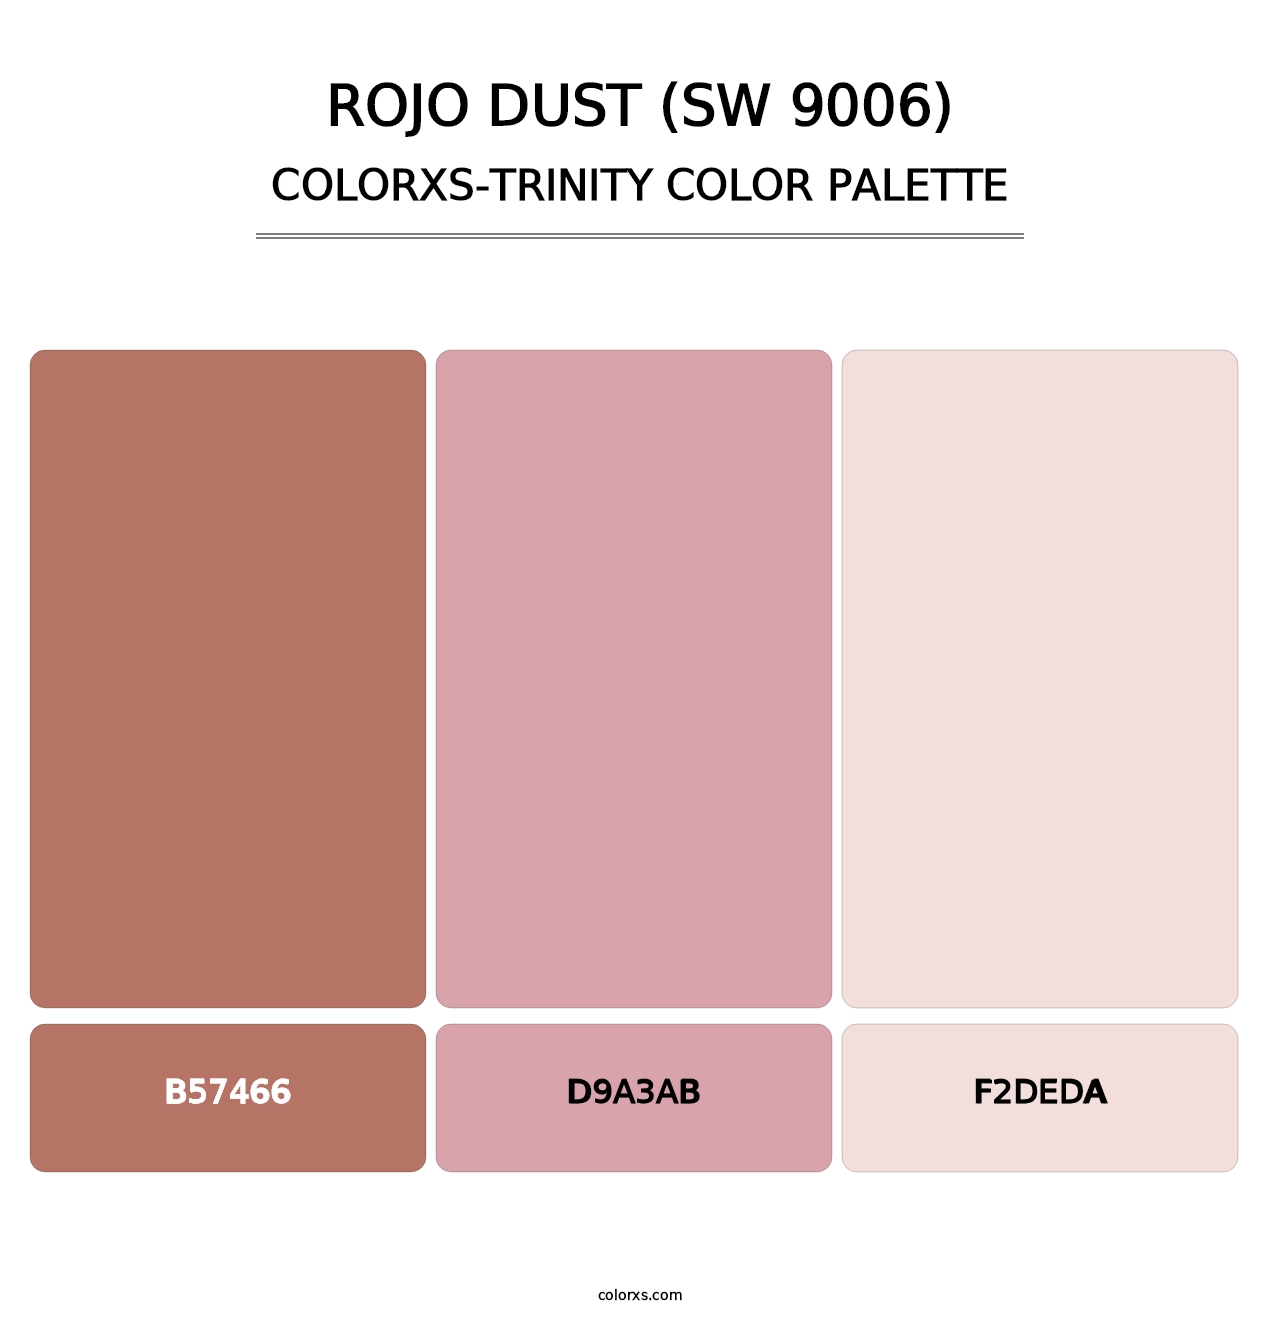 Rojo Dust (SW 9006) - Colorxs Trinity Palette